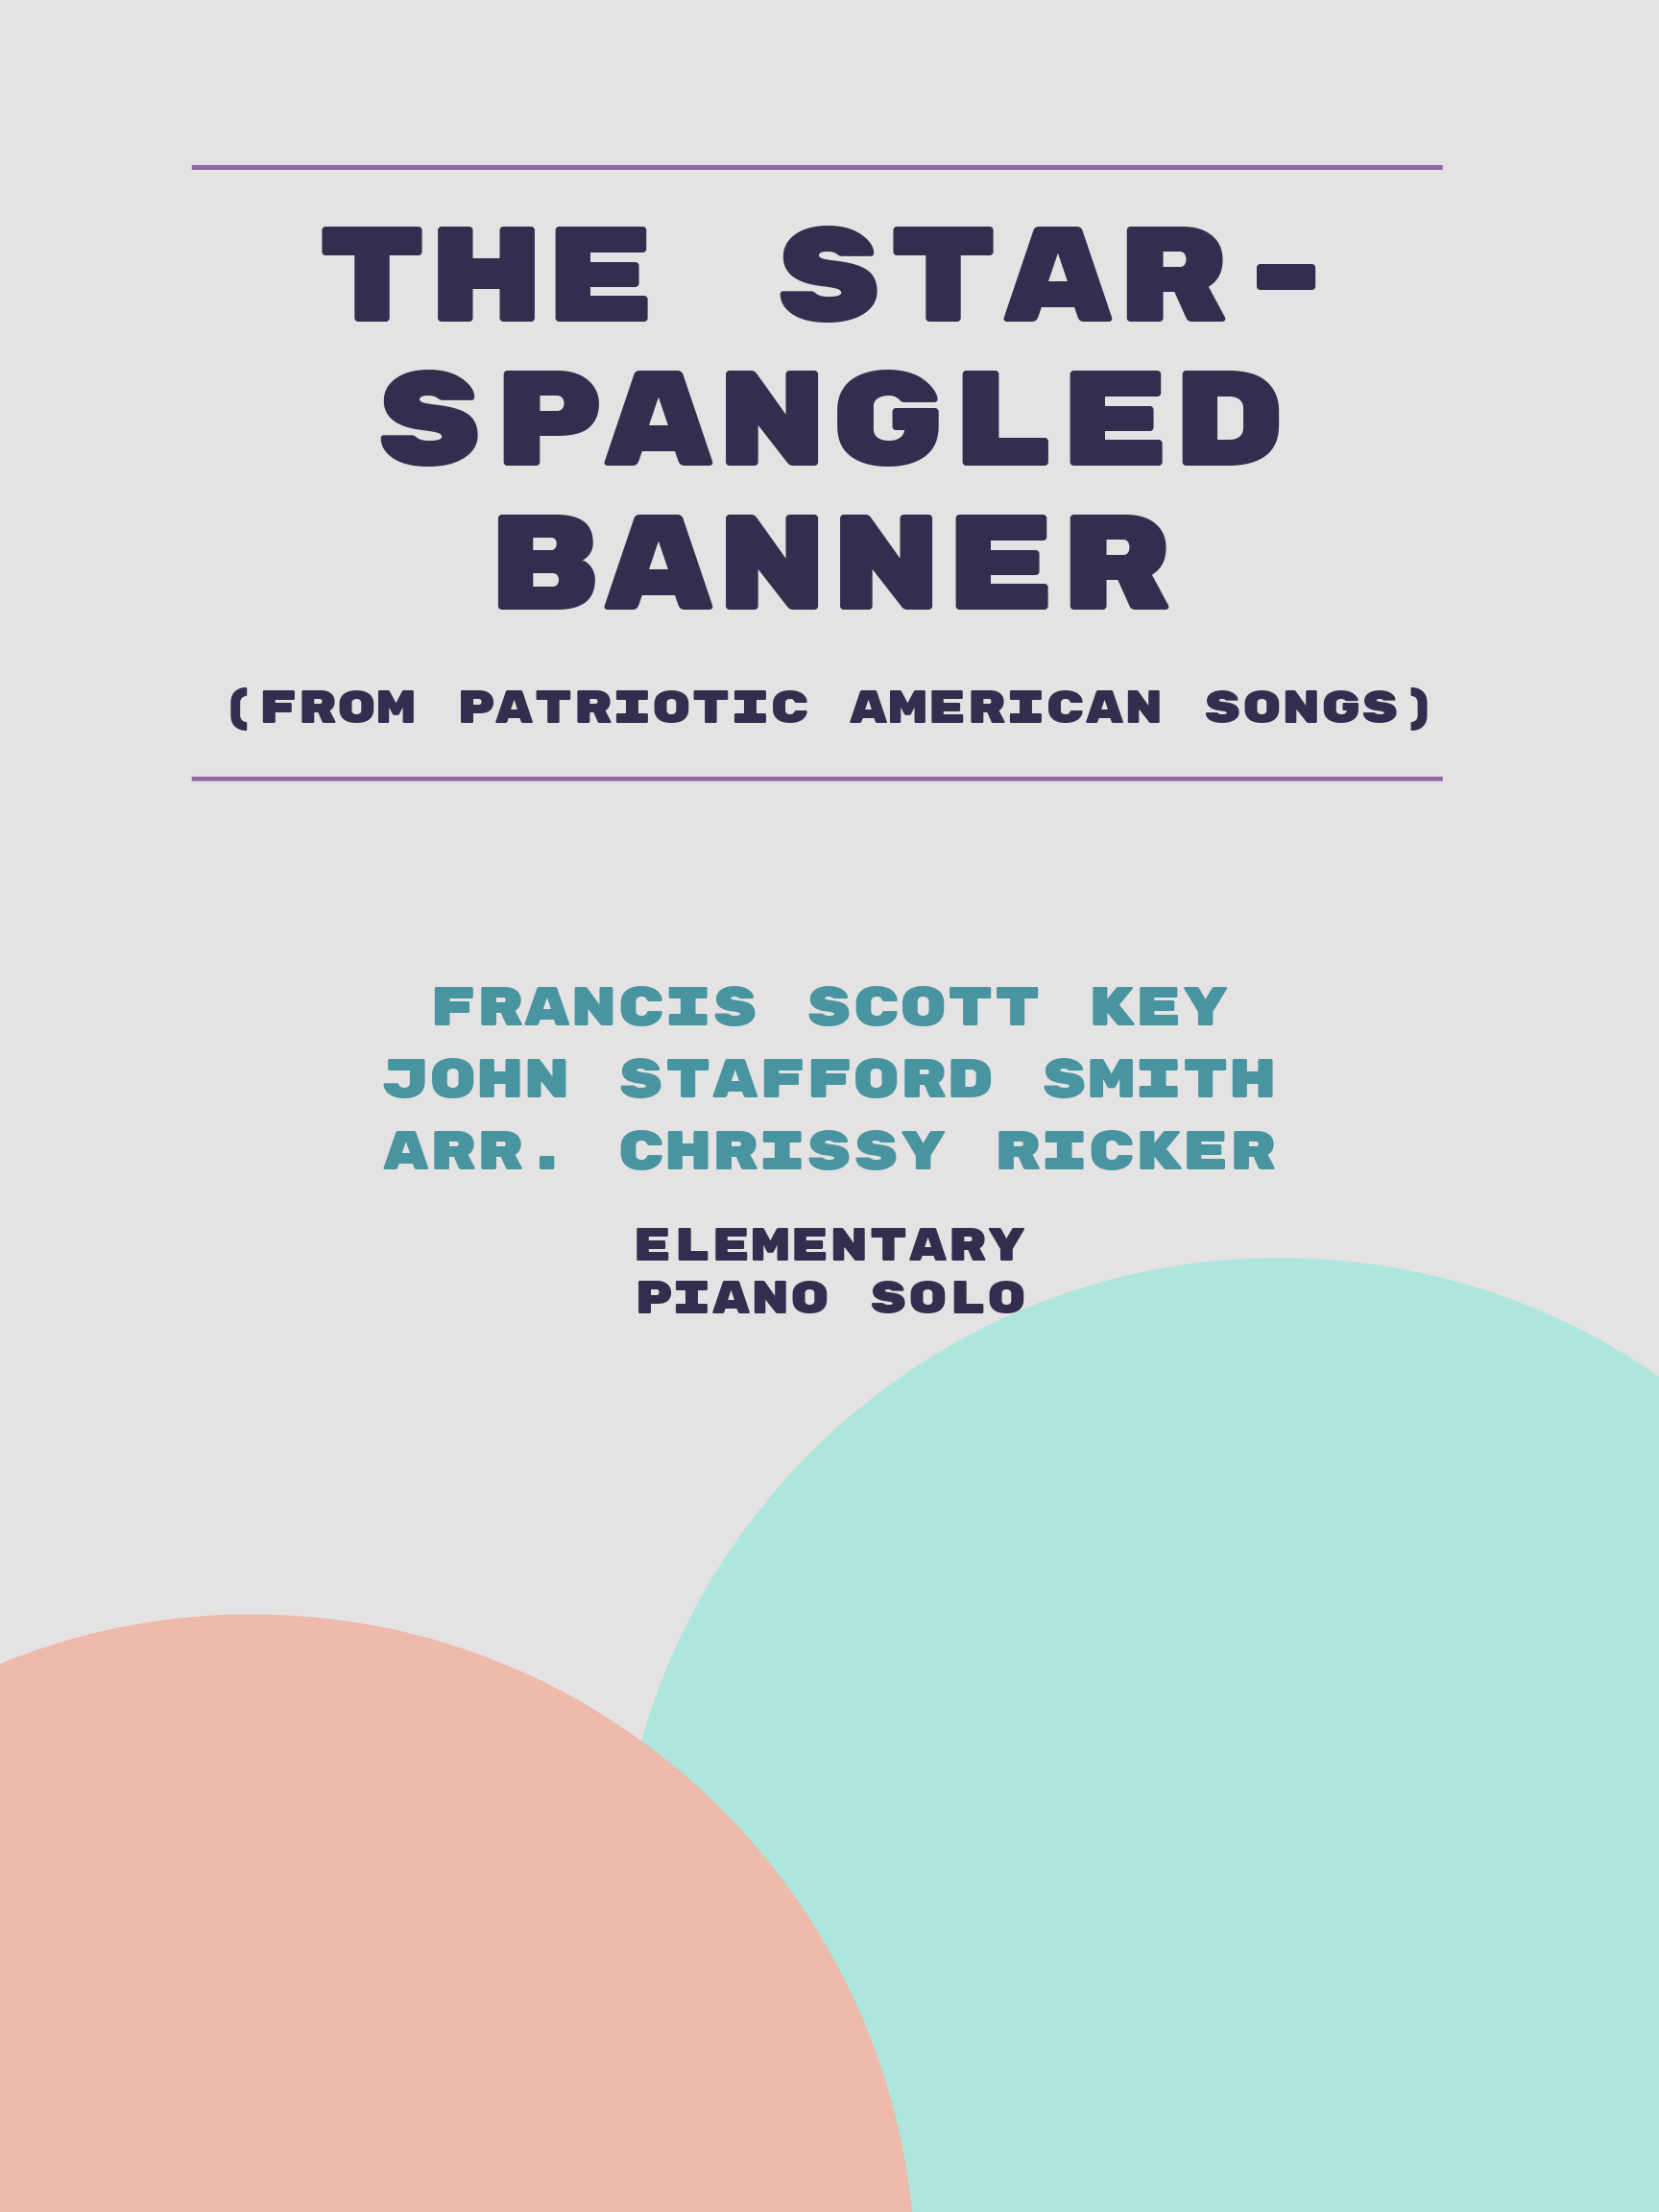 The Star-Spangled Banner by Francis Scott Key, John Stafford Smith